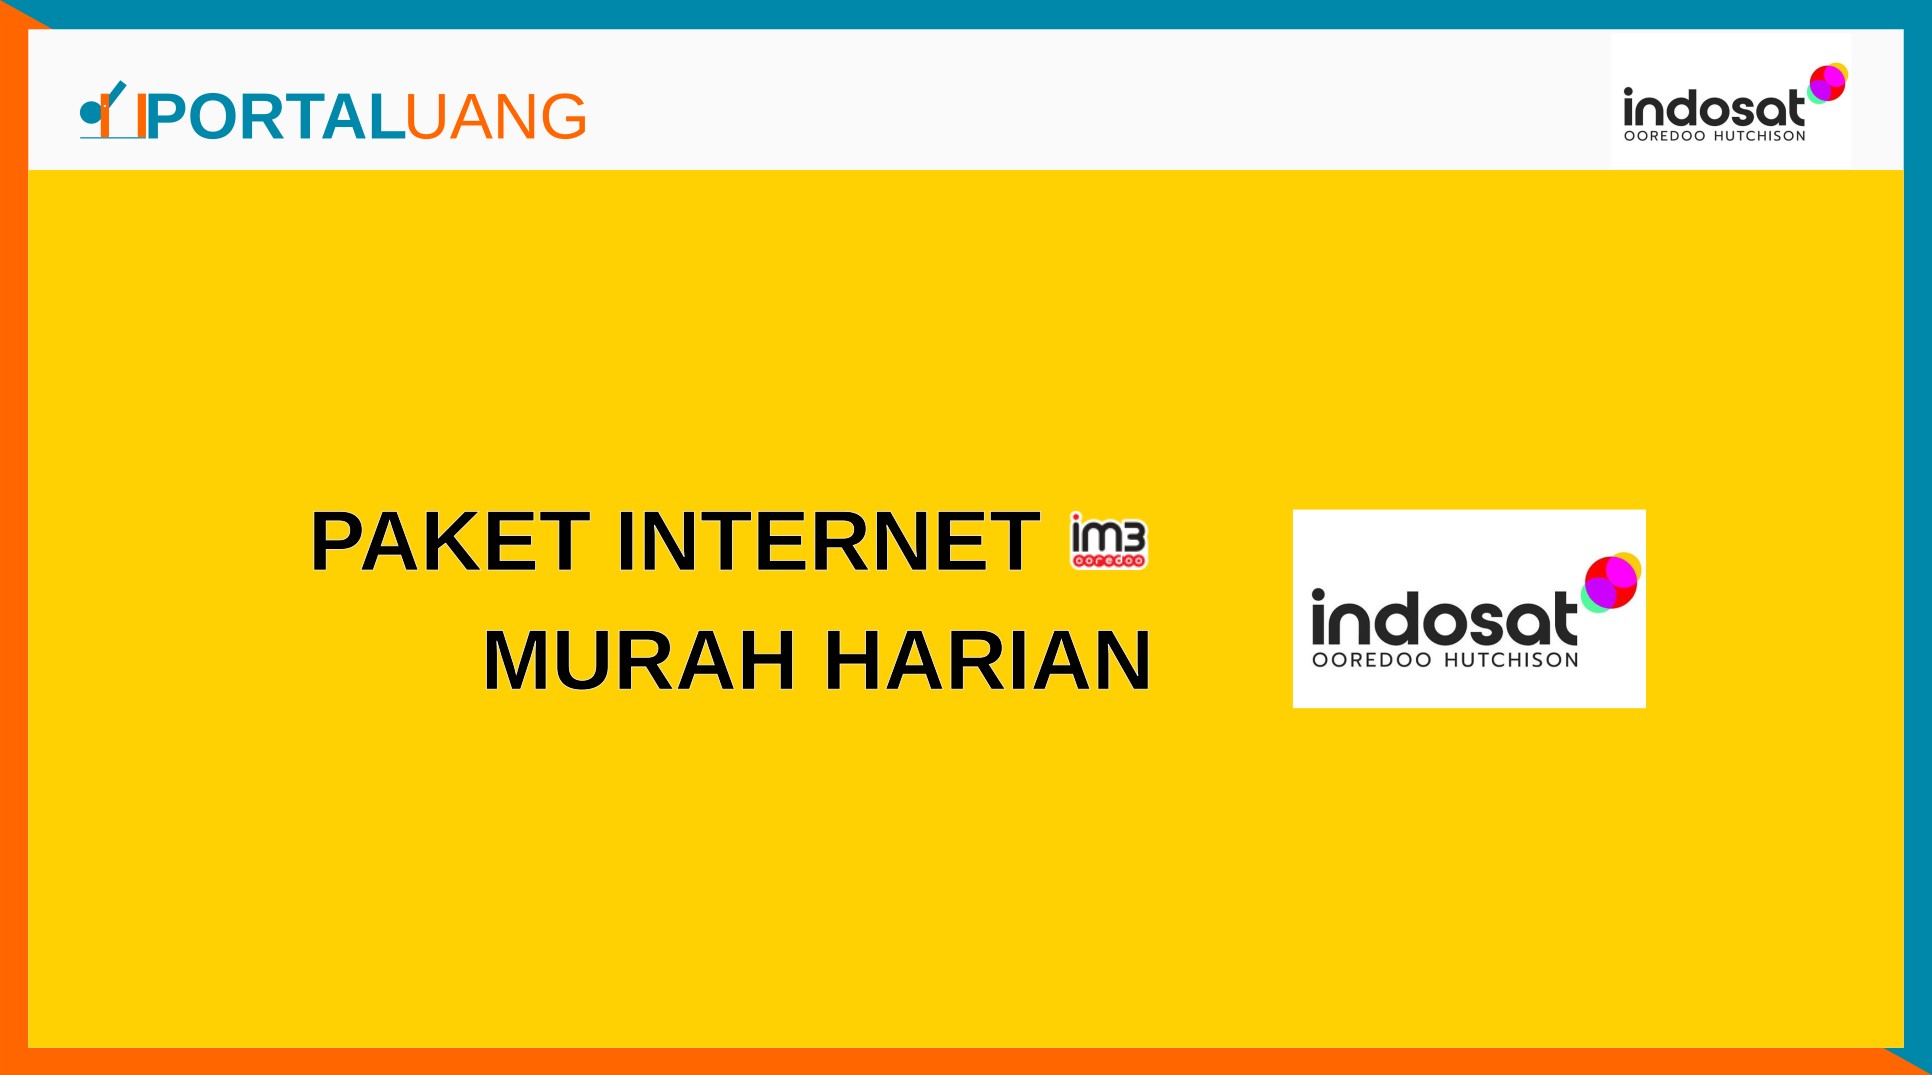 Paket Internet Indosat (IM3) Murah Harian